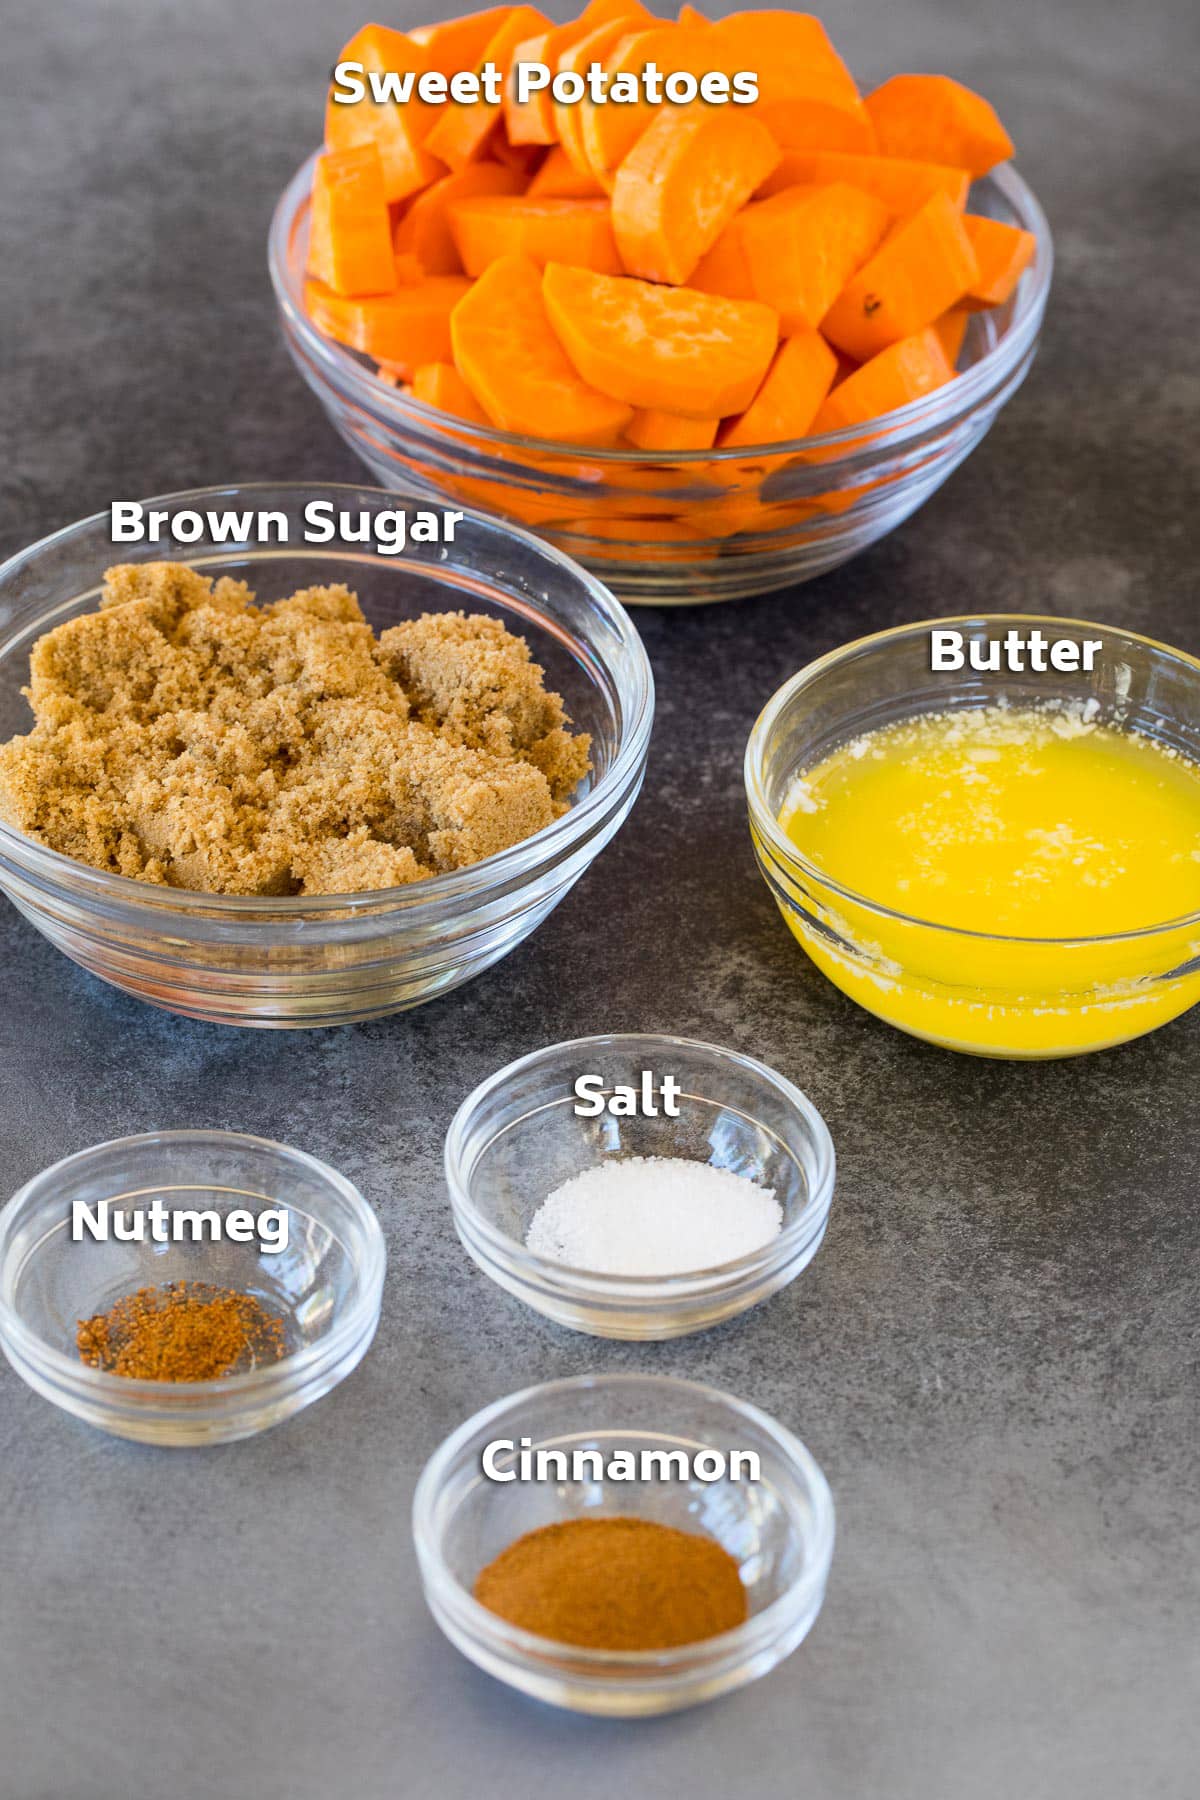 Bowls of ingredients including yams, butter, brown sugar and seasonings.